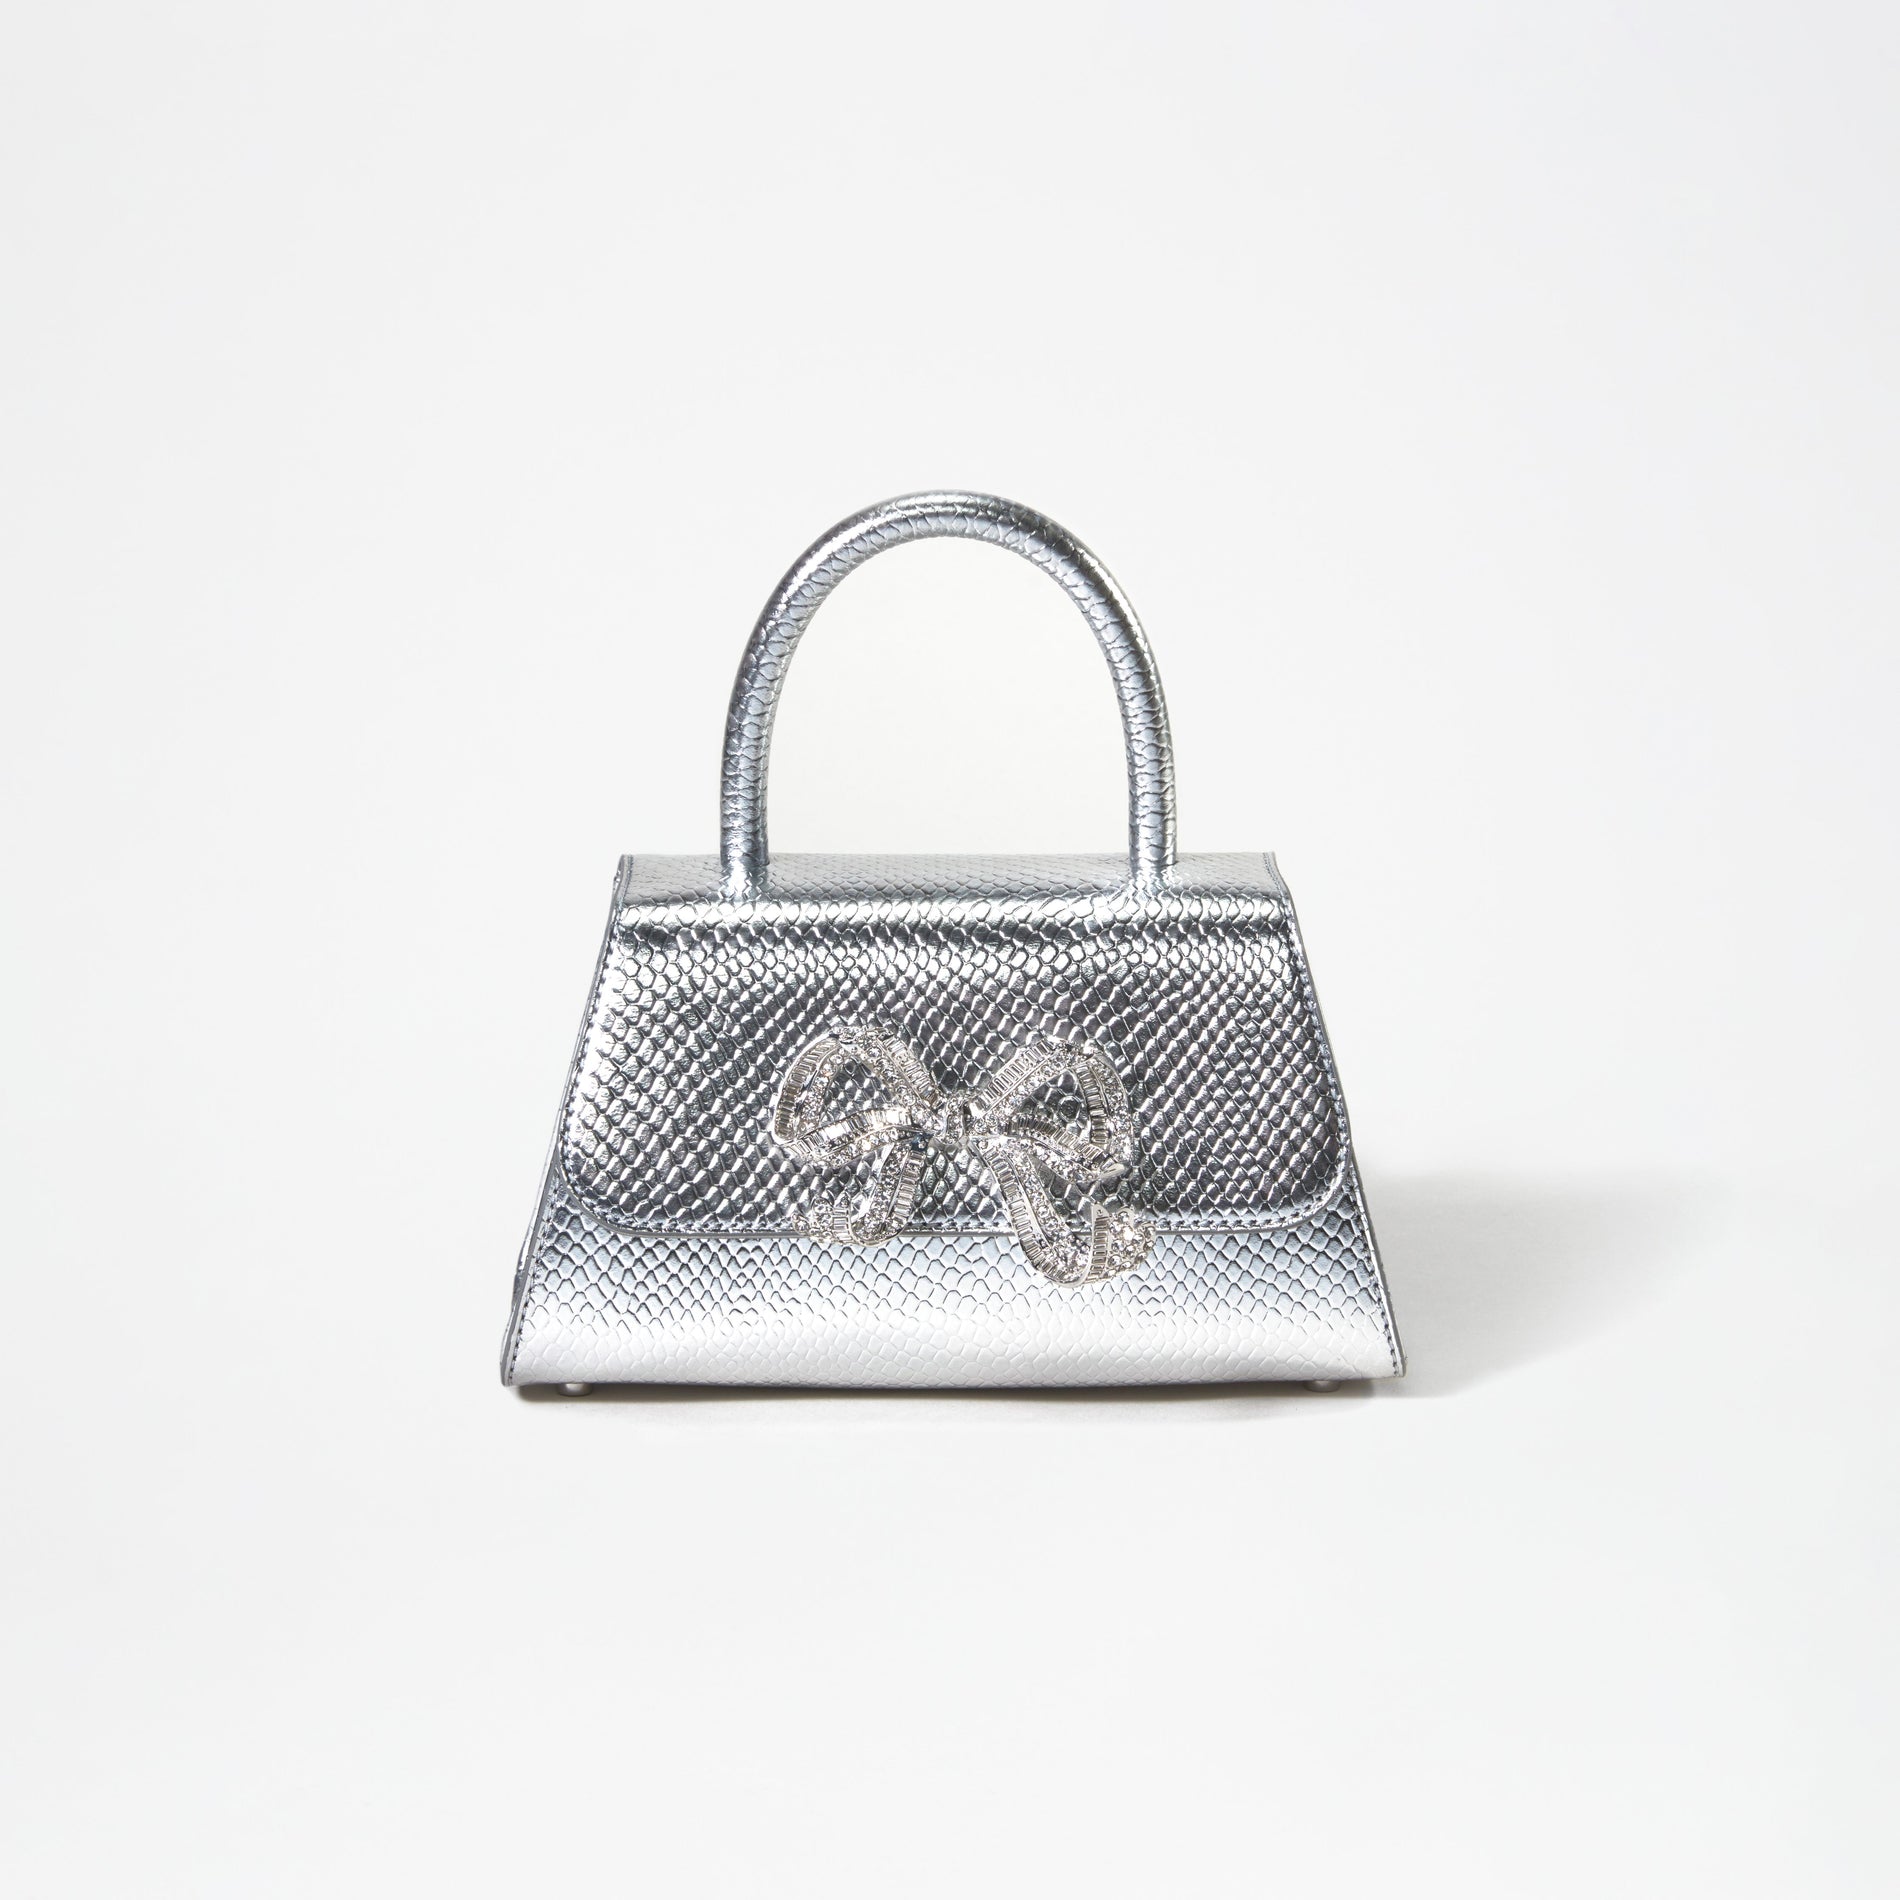 A woman wearing the Silver Python Diamante Bow Mini Bag